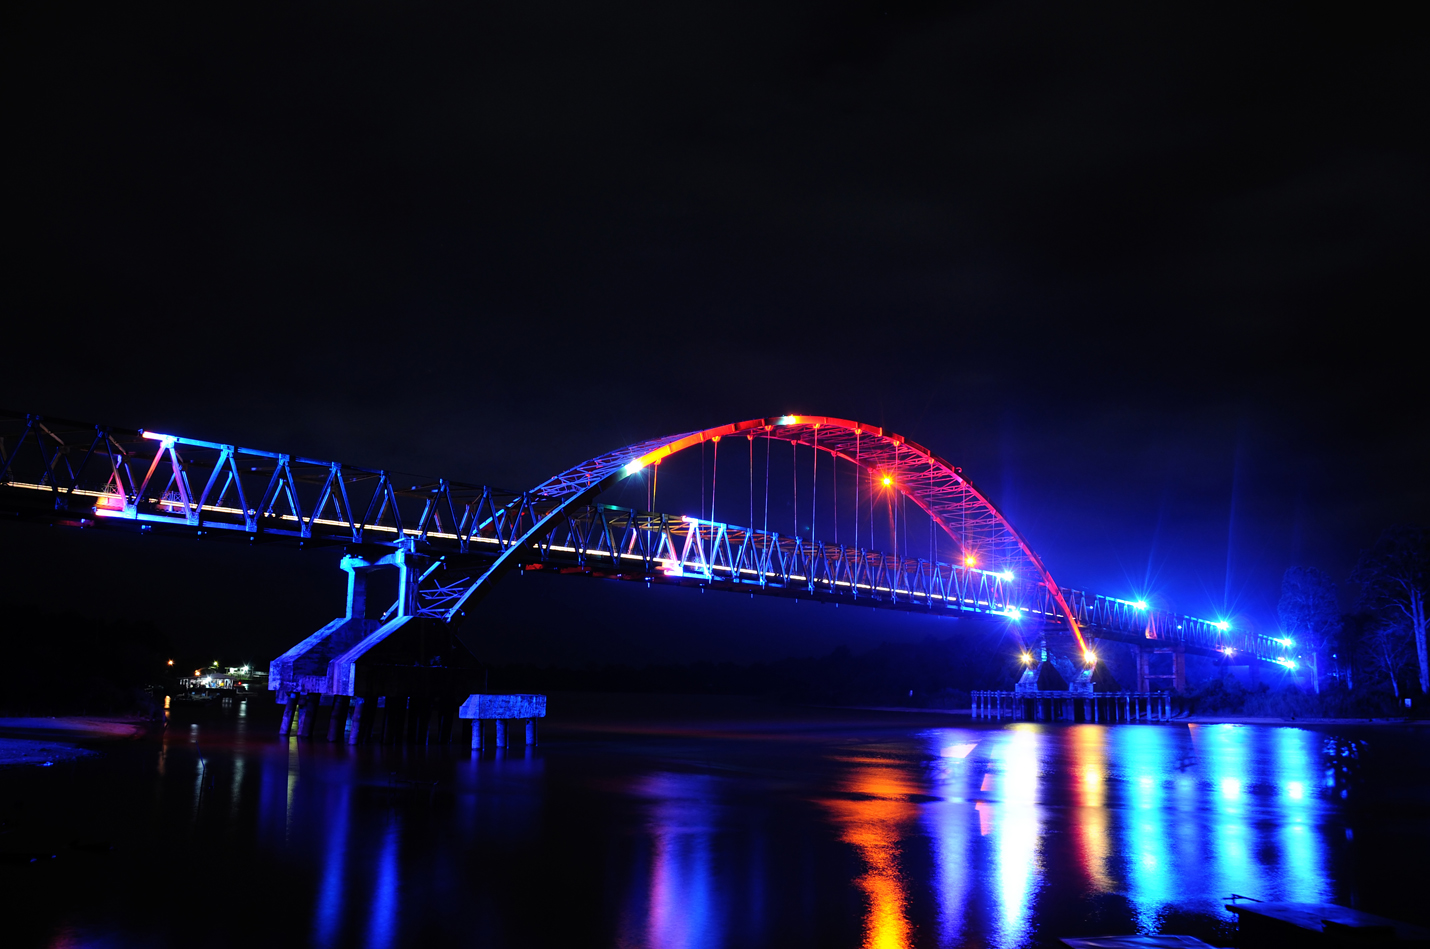 http://ristiyono.files.wordpress.com/2010/10/kahayan-bridge-at-night.jpg